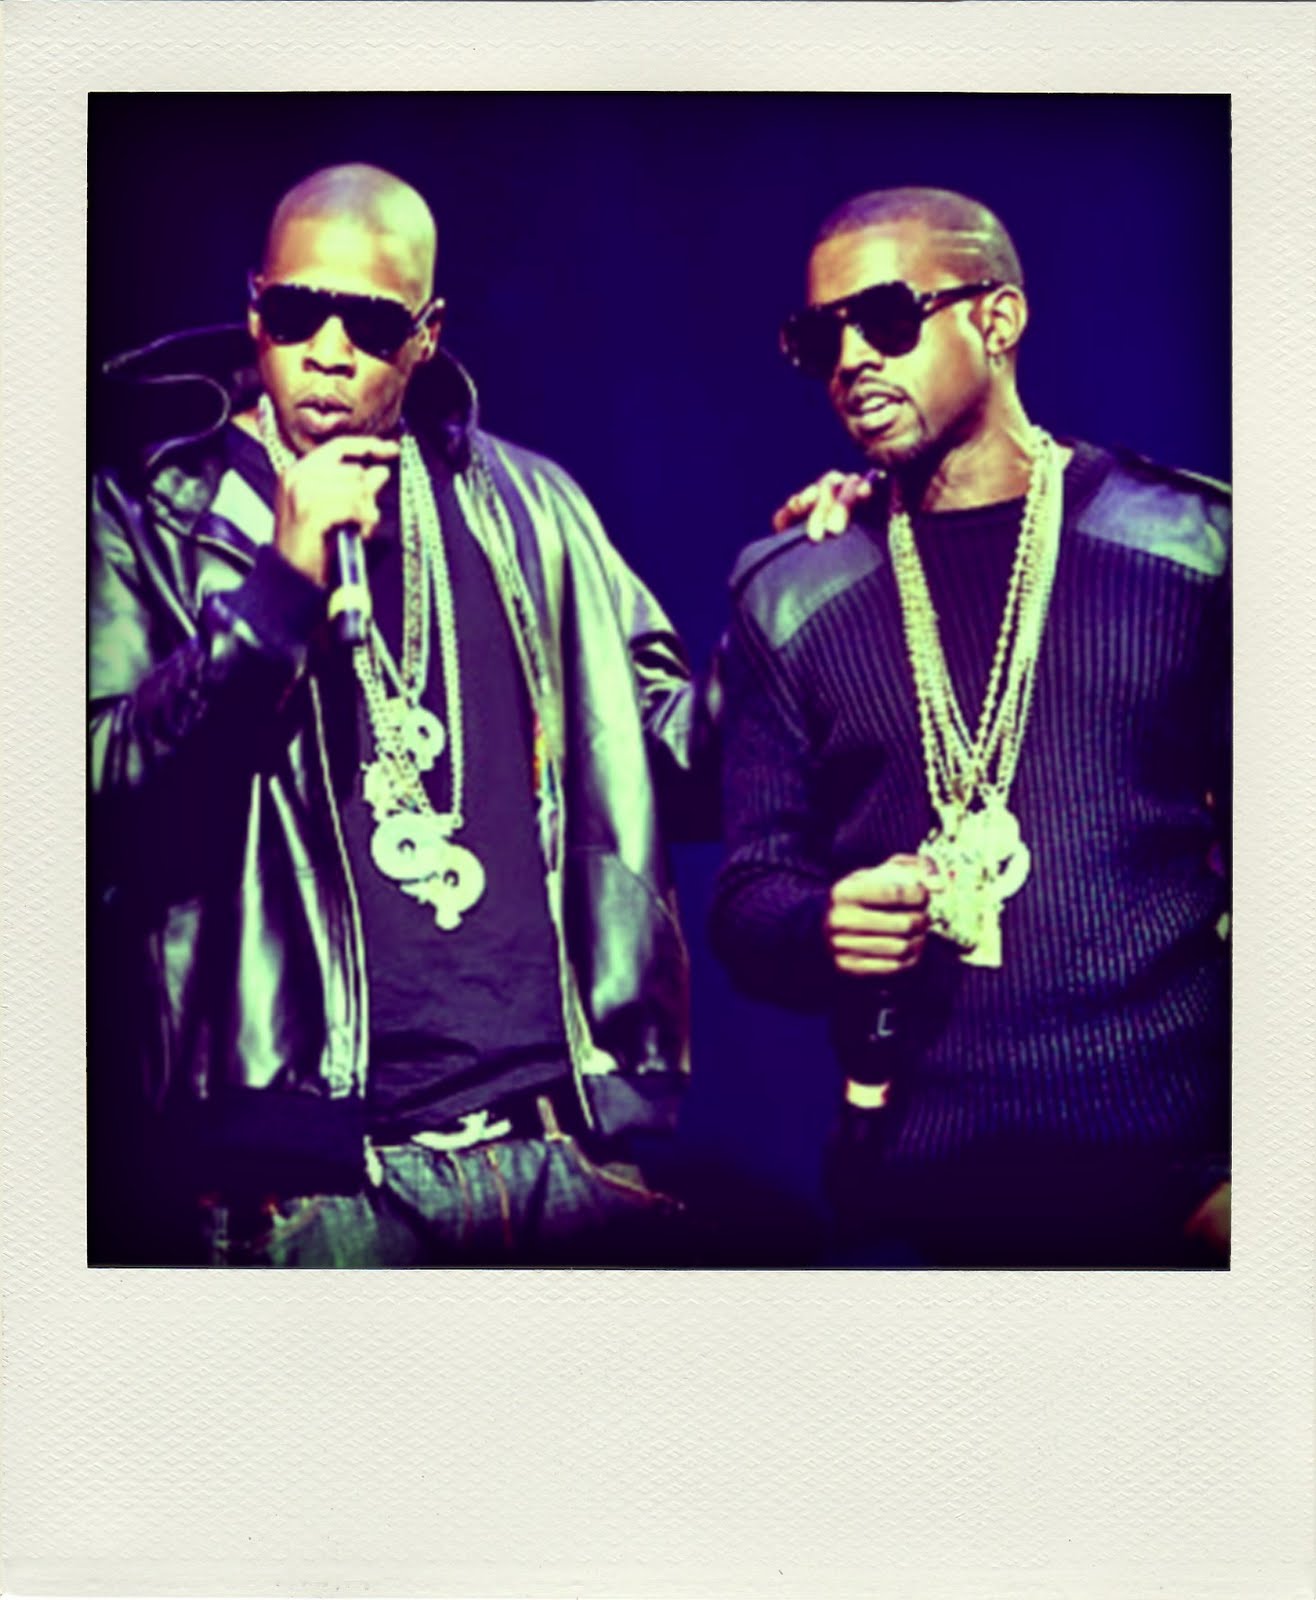 https://blogger.googleusercontent.com/img/b/R29vZ2xl/AVvXsEhYPhpxbnT5yq0pdIBjEkgwDnz55uRByS56Kc12HAbOZ7anQ4nenuhLtwR3CstJAl7NhkcRbYA8X7cicxgGAIsoMRXTIjXMPzbid46UfOVWQ0txRiIZHfJHo_U0tQE5lcDZQ_5yPEgAaeE/s1600/wpid-Jay-Z-Kanye-West-pola.jpg